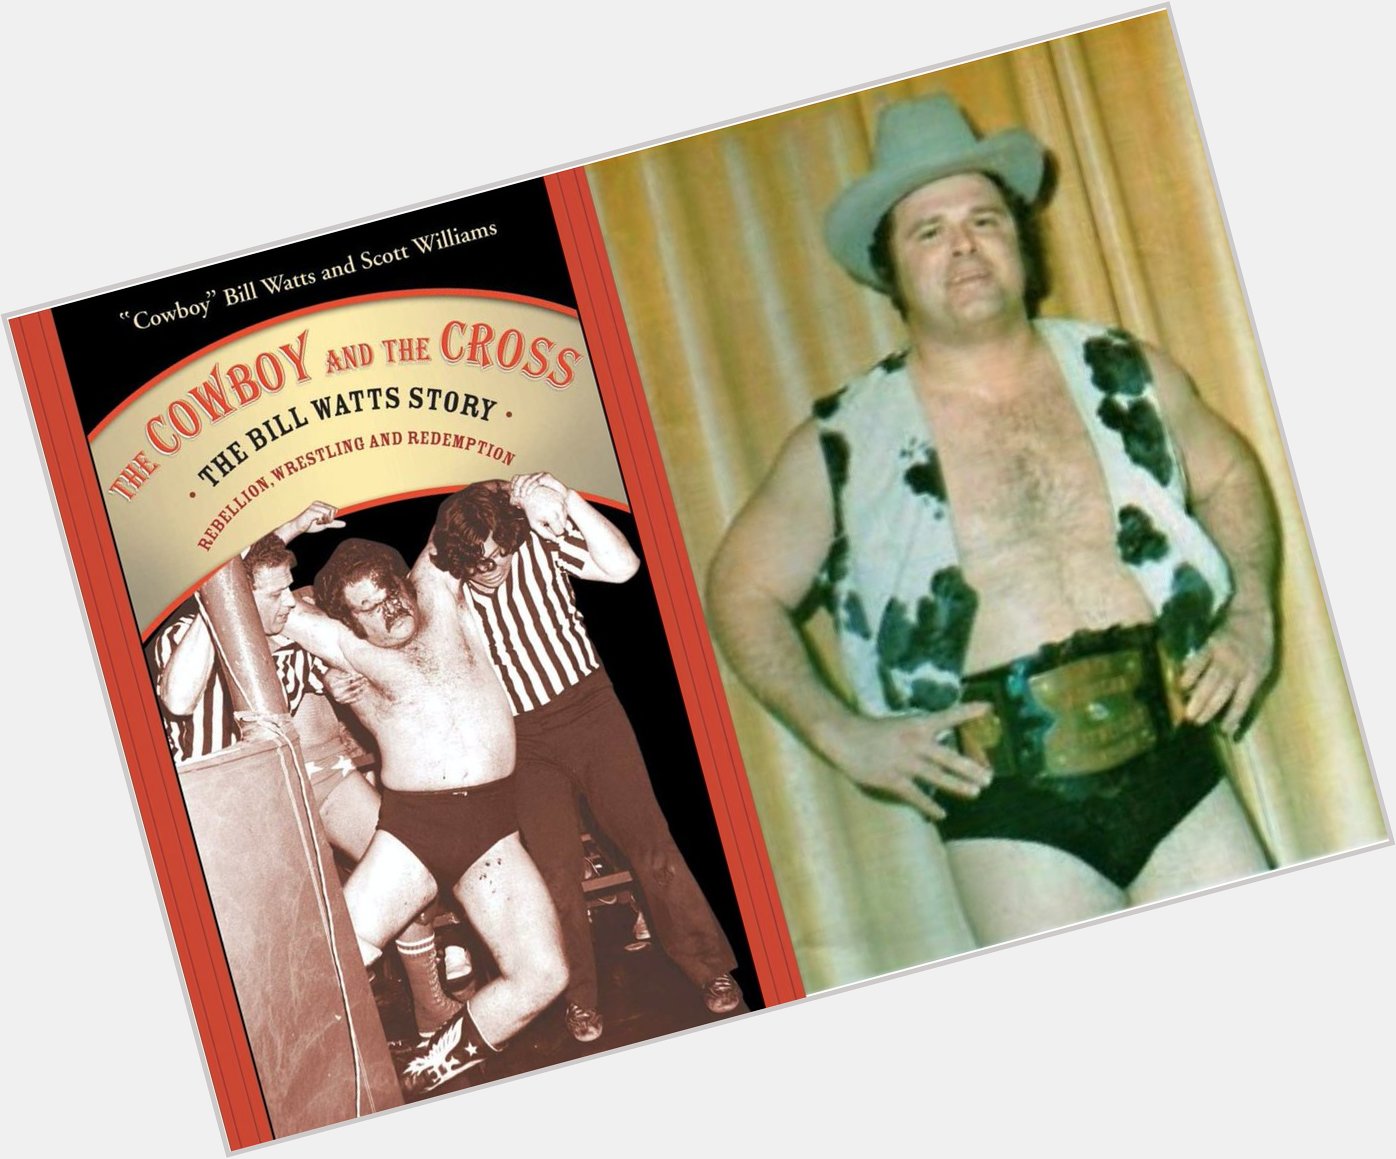 WrestleBooks would like to wish Cowboy Bill Watts a Happy 83rd Birthday. 